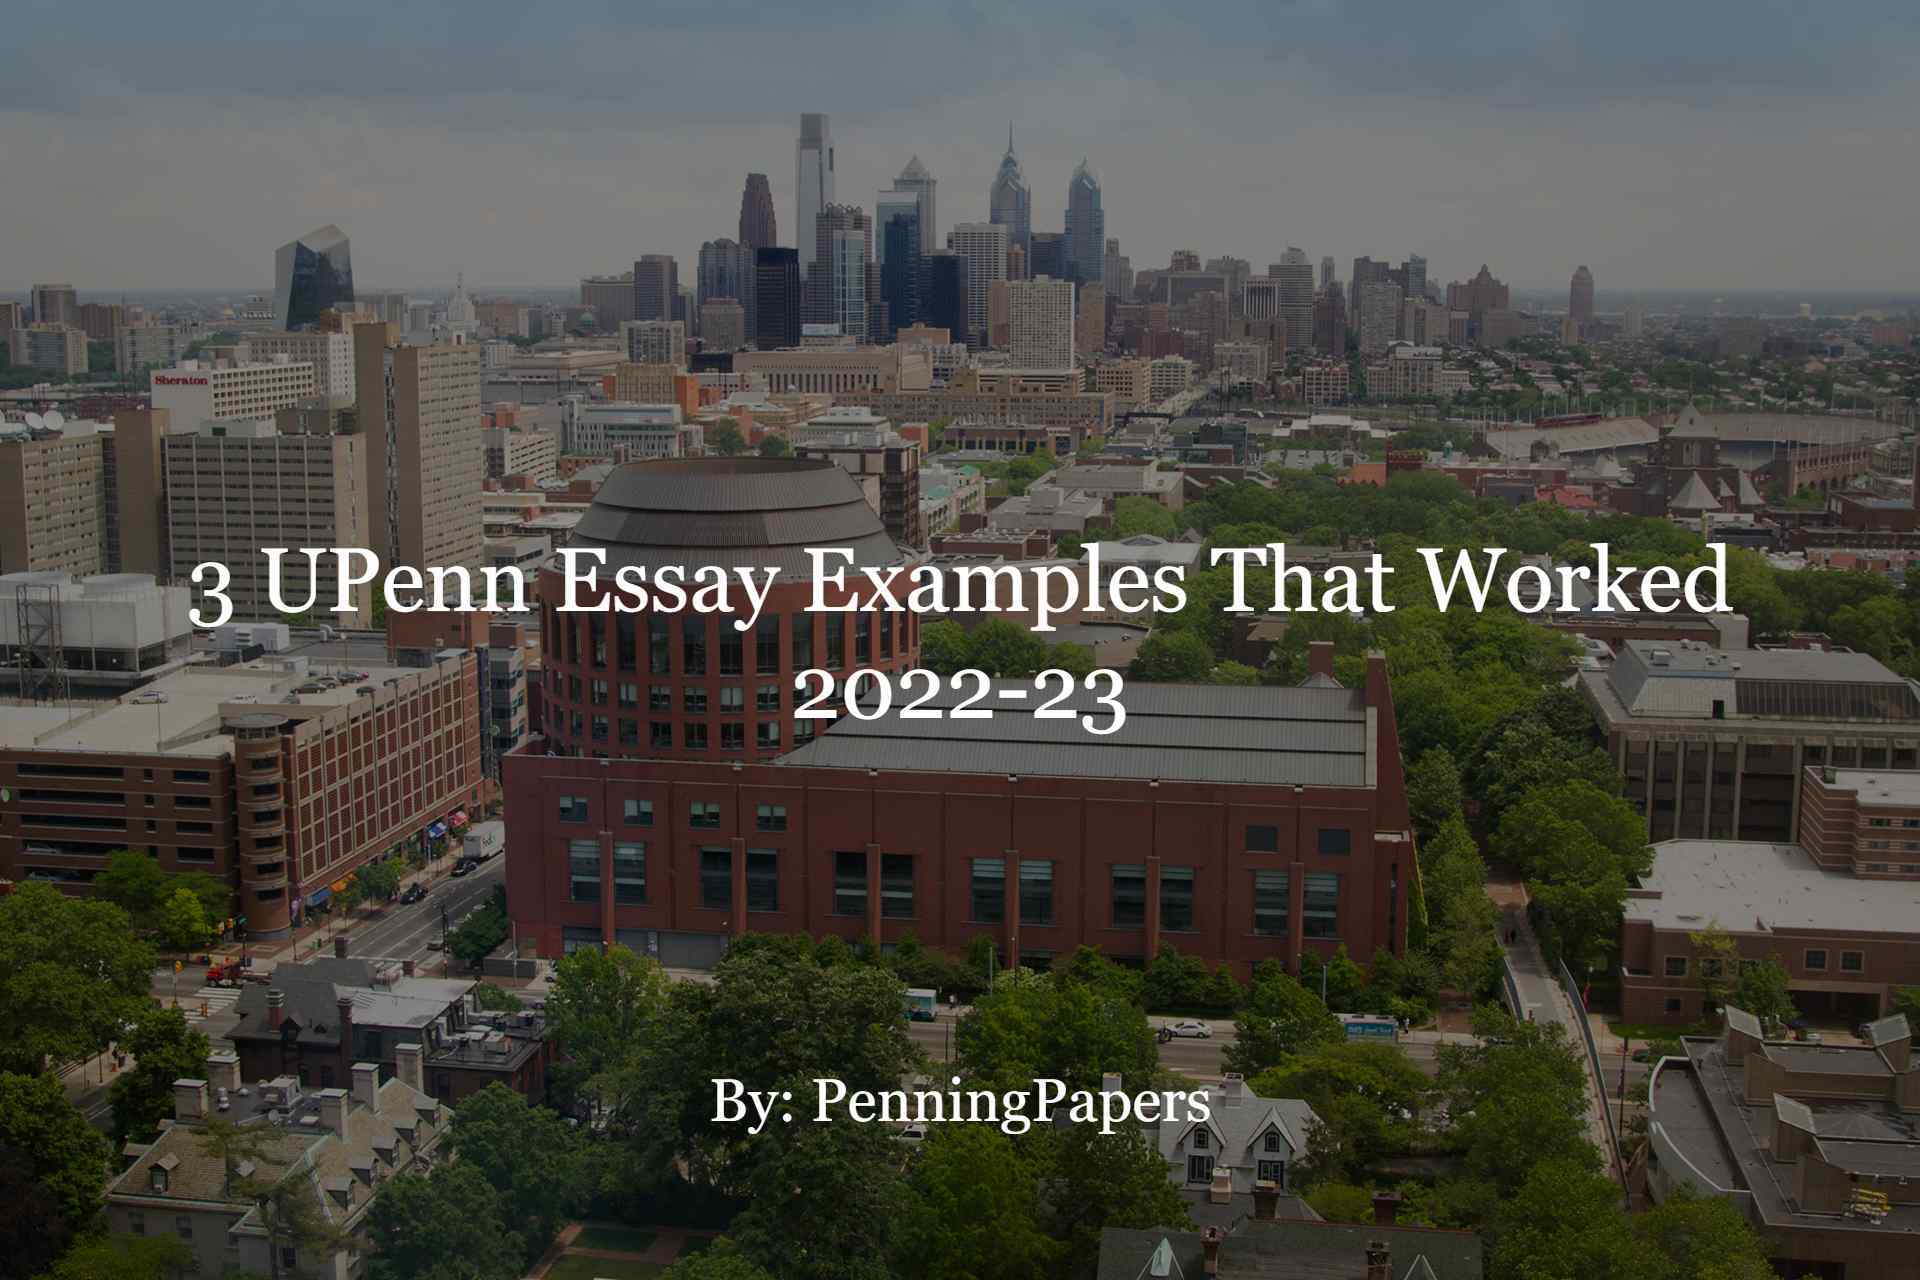 upenn example essays